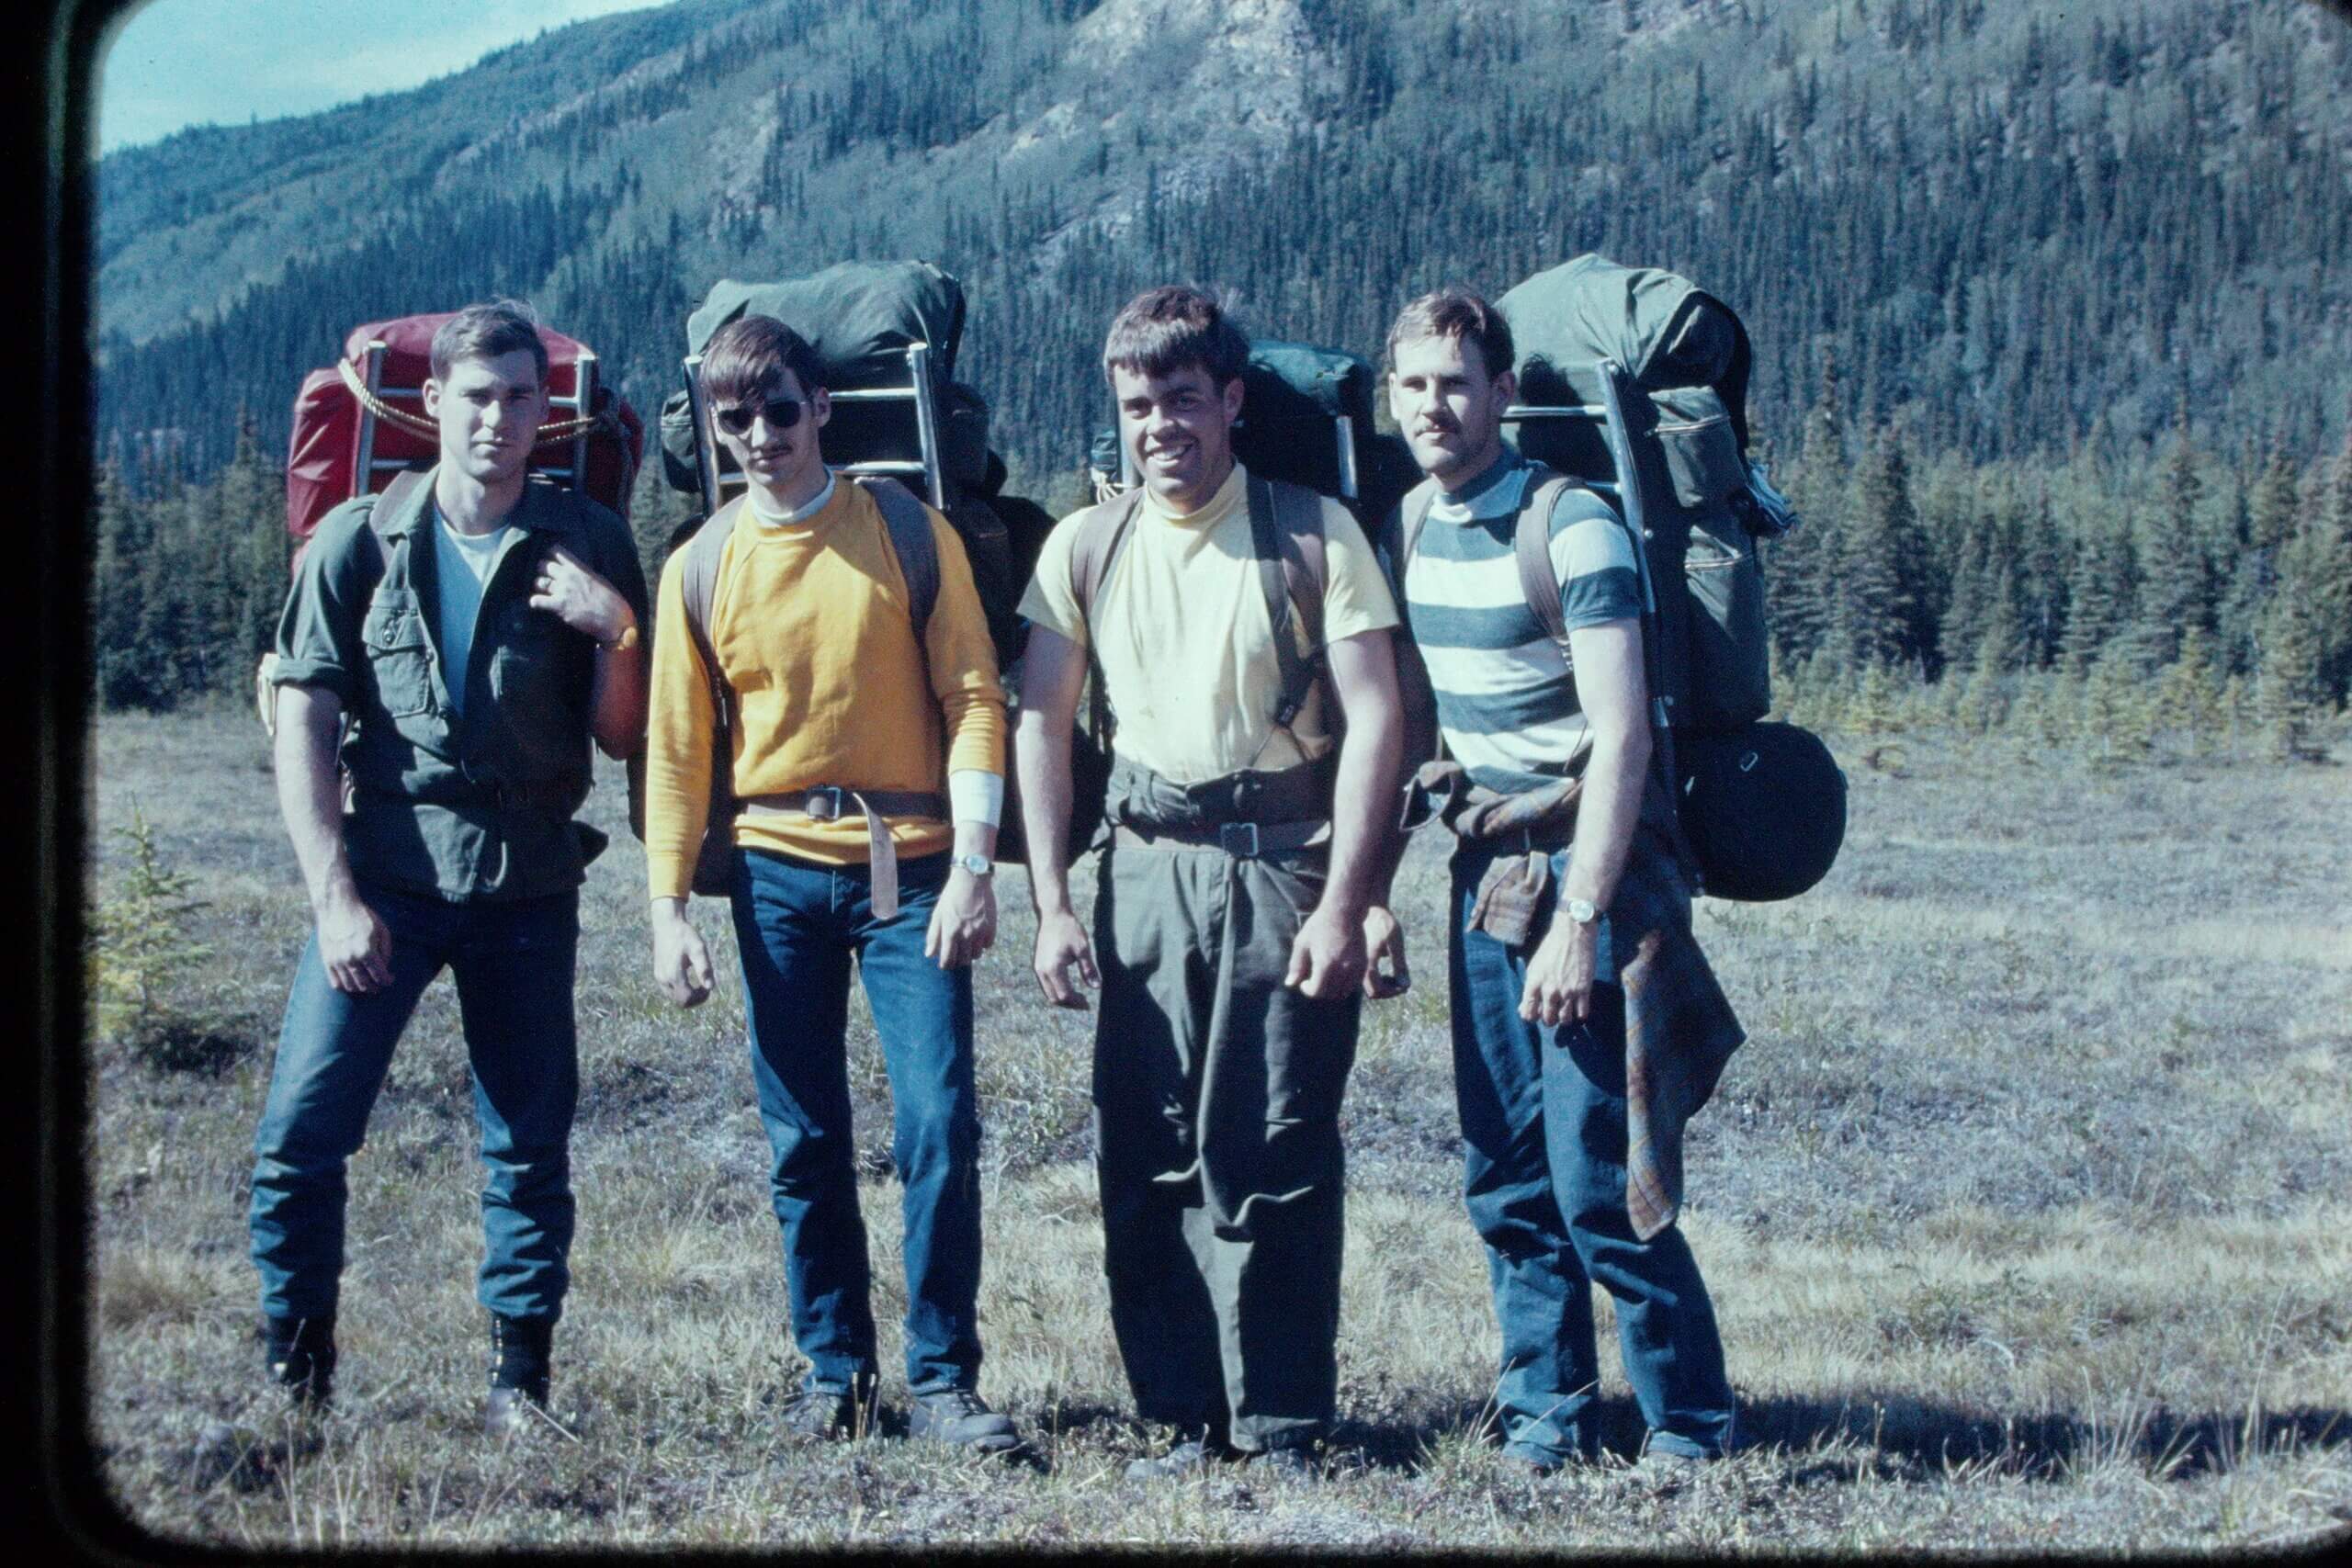 Bill Barnett, Tom Blume, Jeff Weih, and Hoff starting Gerstle Glacier trip